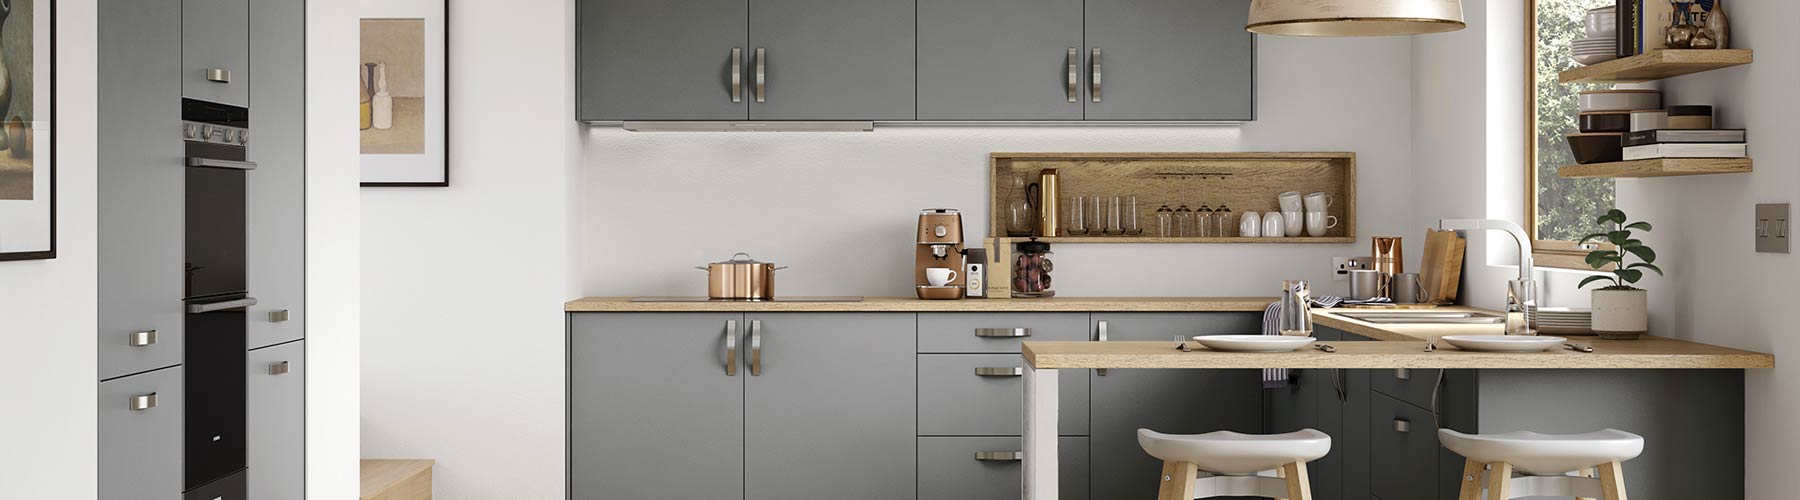 Matt slab grey contemporary kitchen with timber worktops.